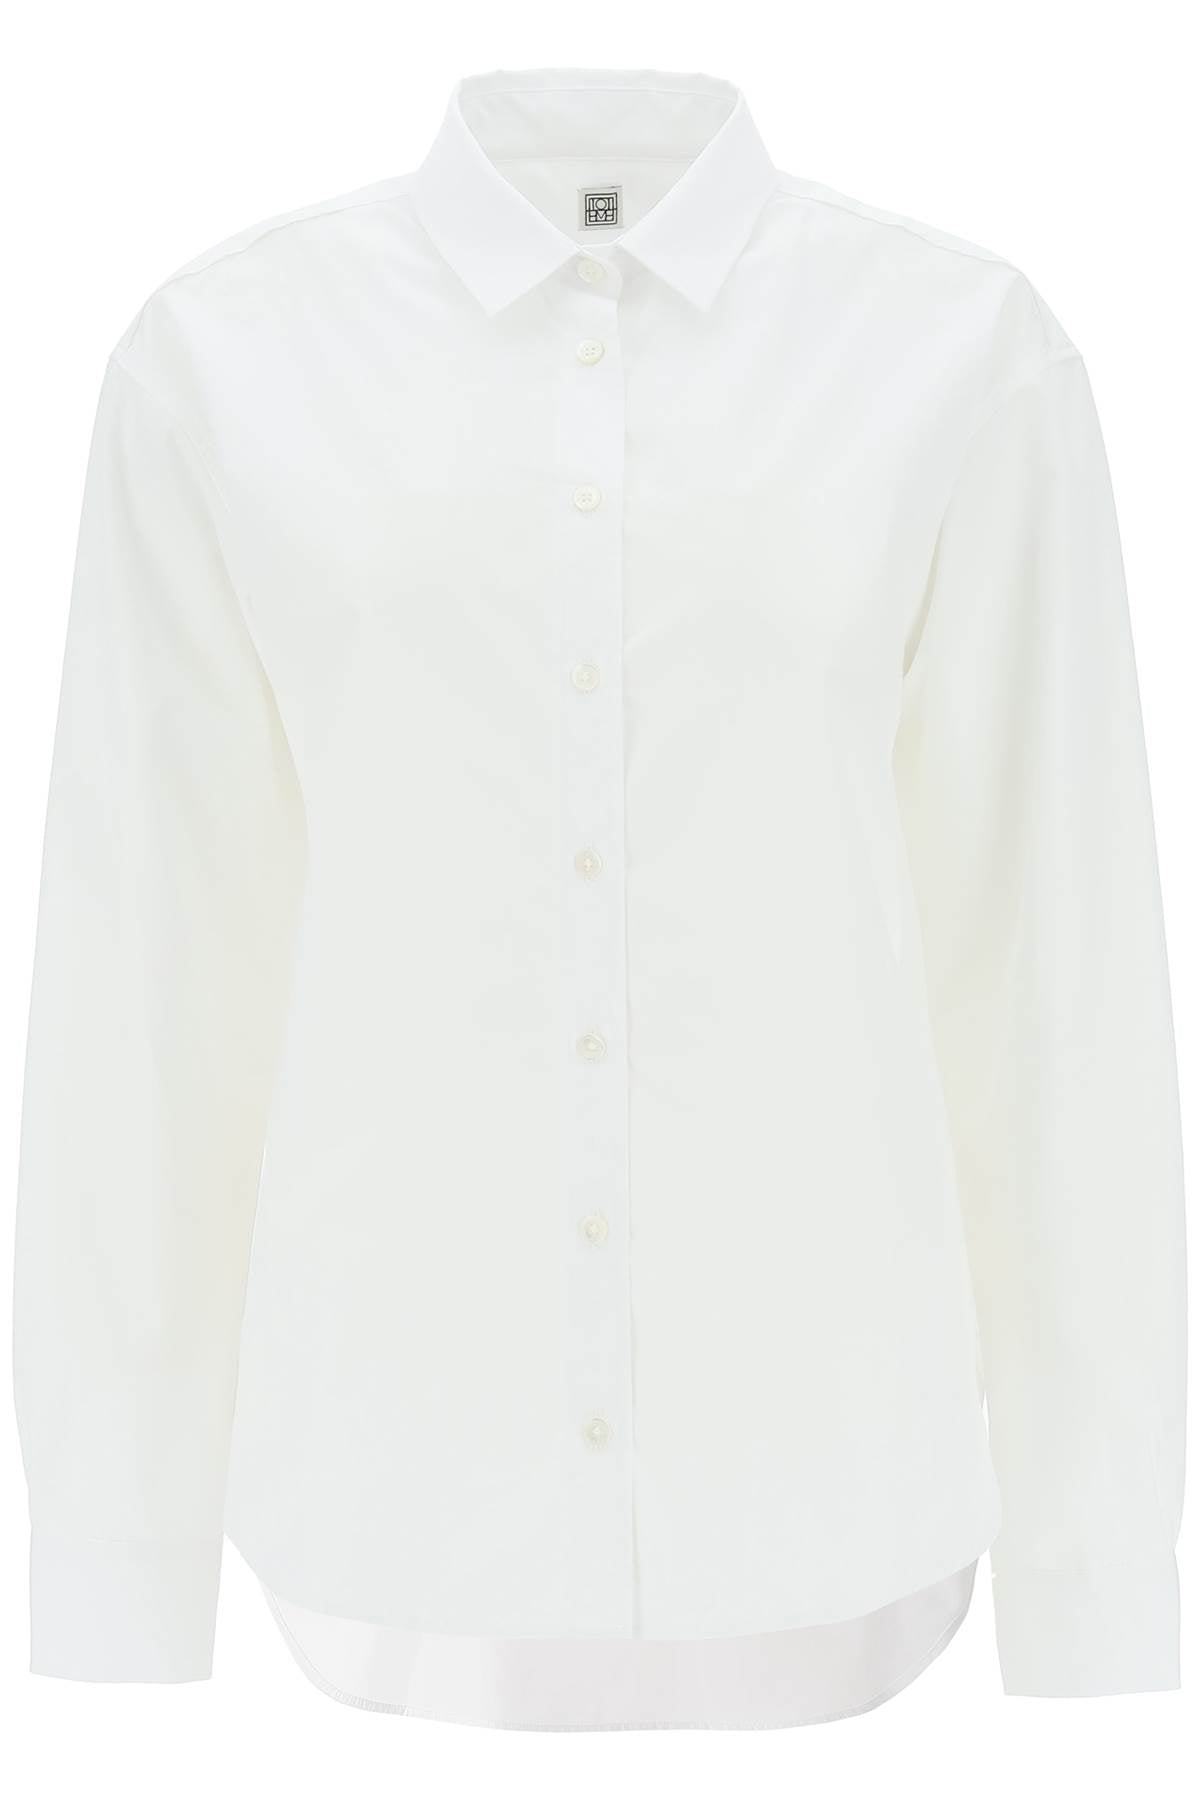 Toteme Logo Embroidered Cotton Shirt   White